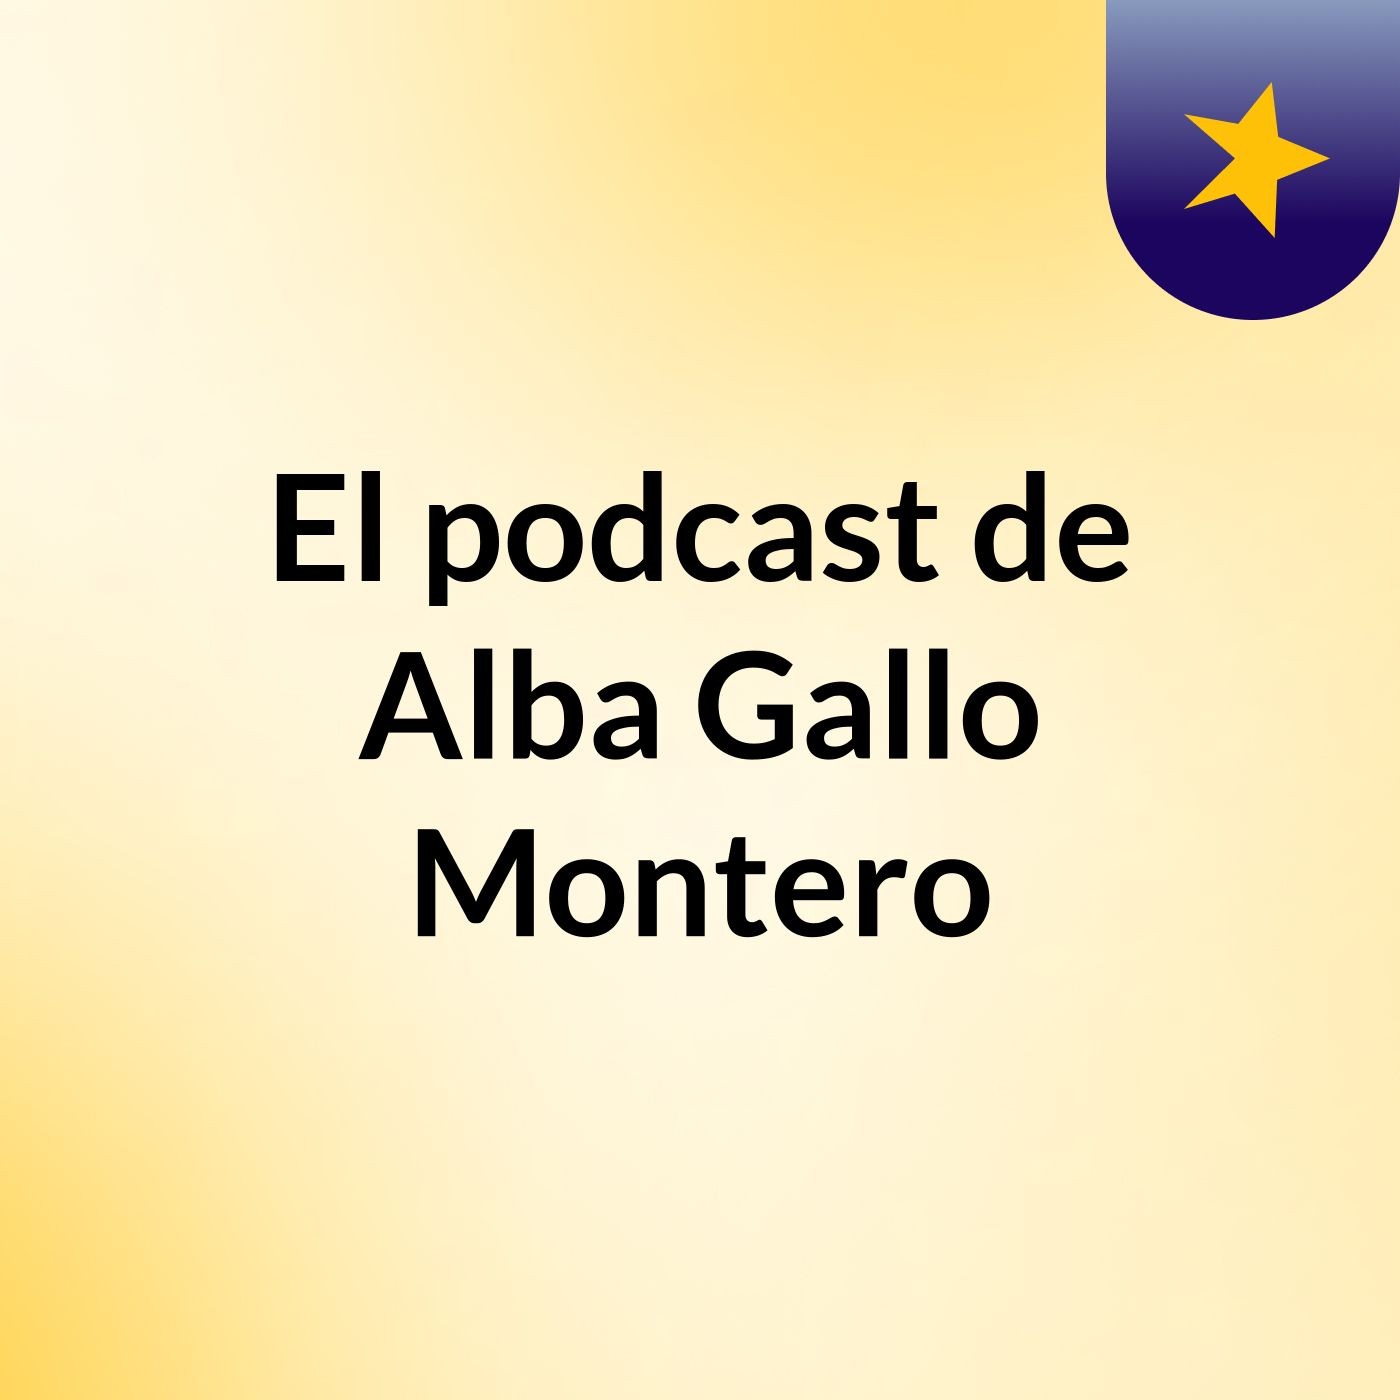 El podcast de Alba Gallo Montero